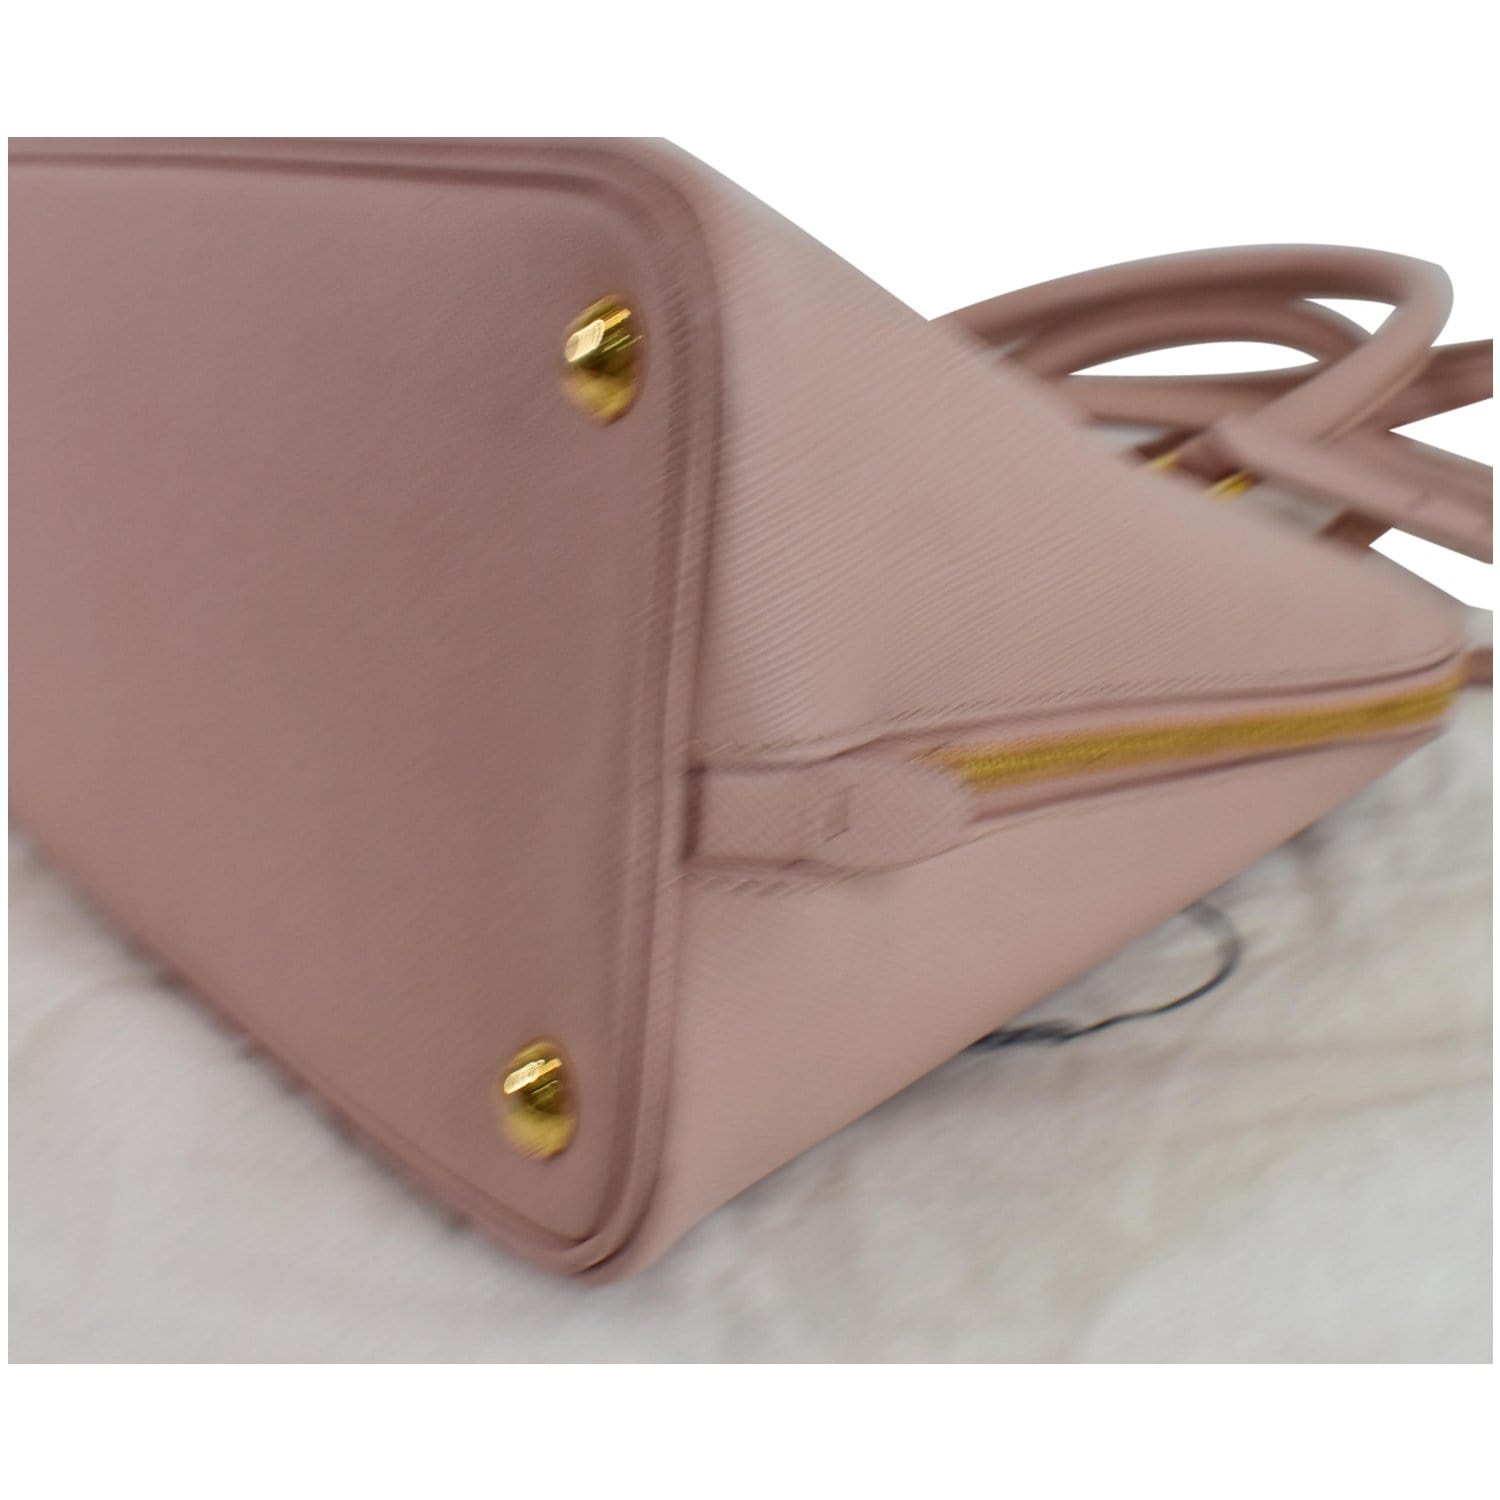 Prada Saffiano Promenade Leather Shoulder Bag on SALE